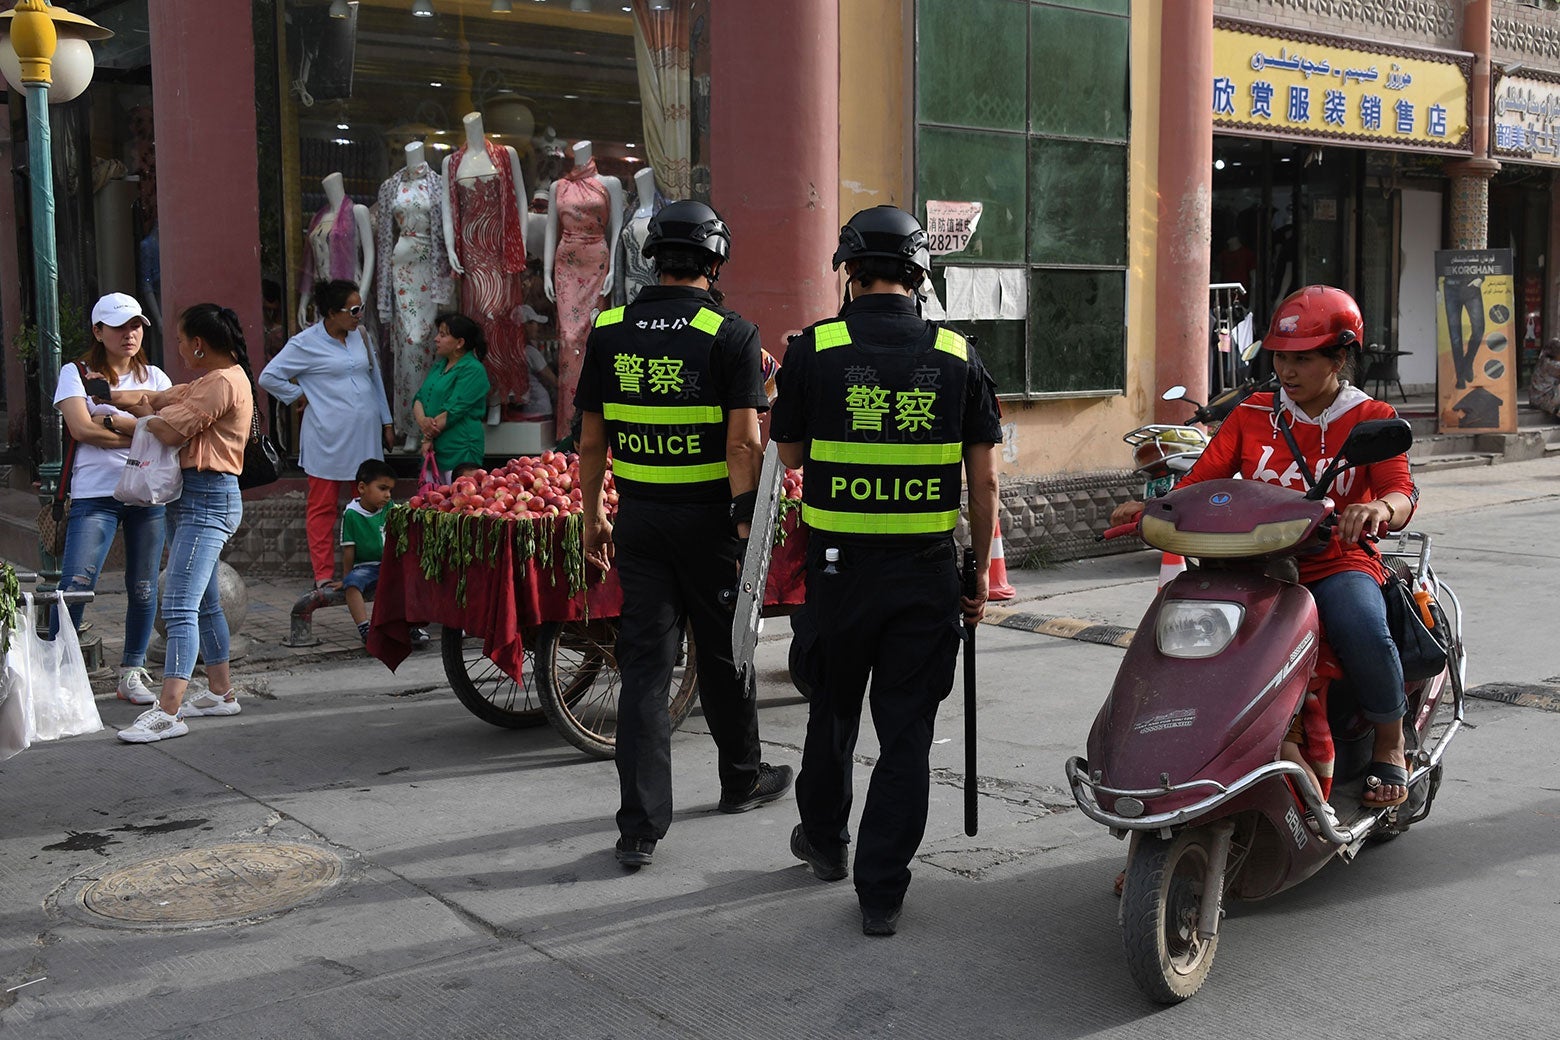 Police officers walk along a street near a fruit cart as a moped passes.